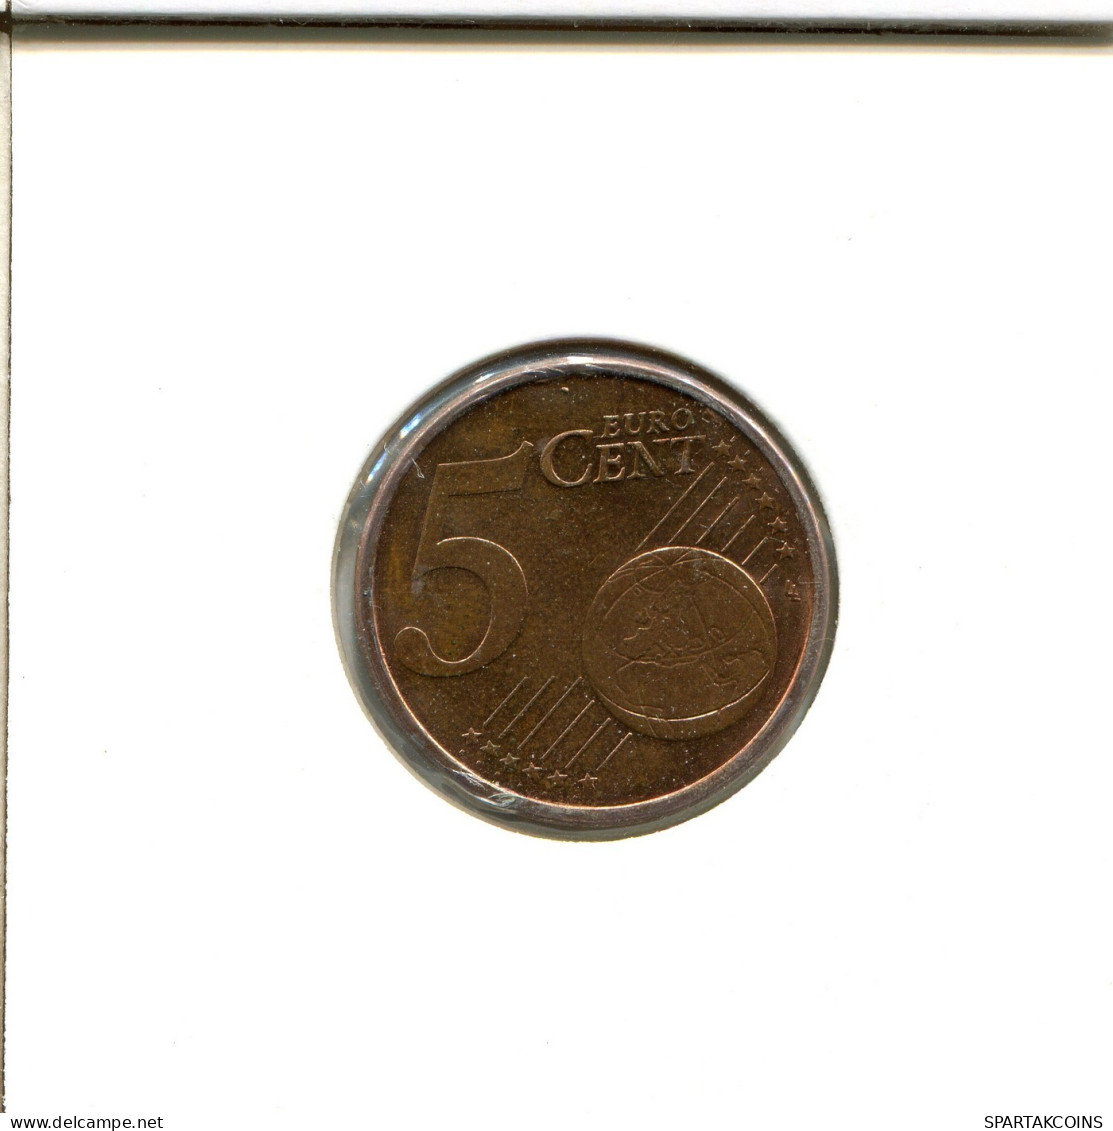 5 EURO CENTS 2008 SPAIN Coin #EU571.U.A - Espagne